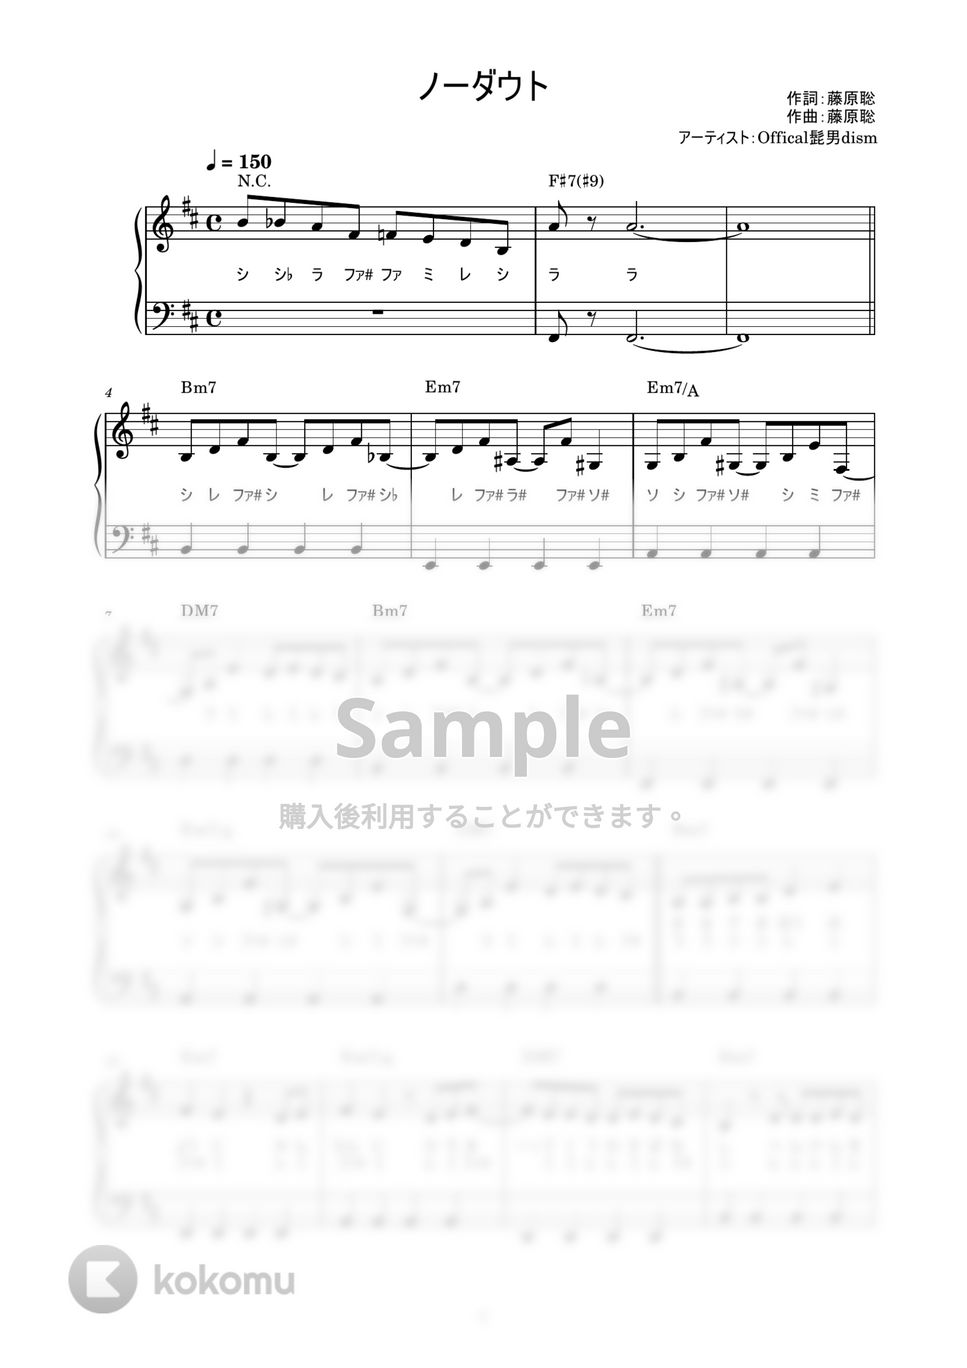 Official 髭男dism - ノーダウト (かんたん / 歌詞付き / ドレミ付き / 初心者) by piano.tokyo